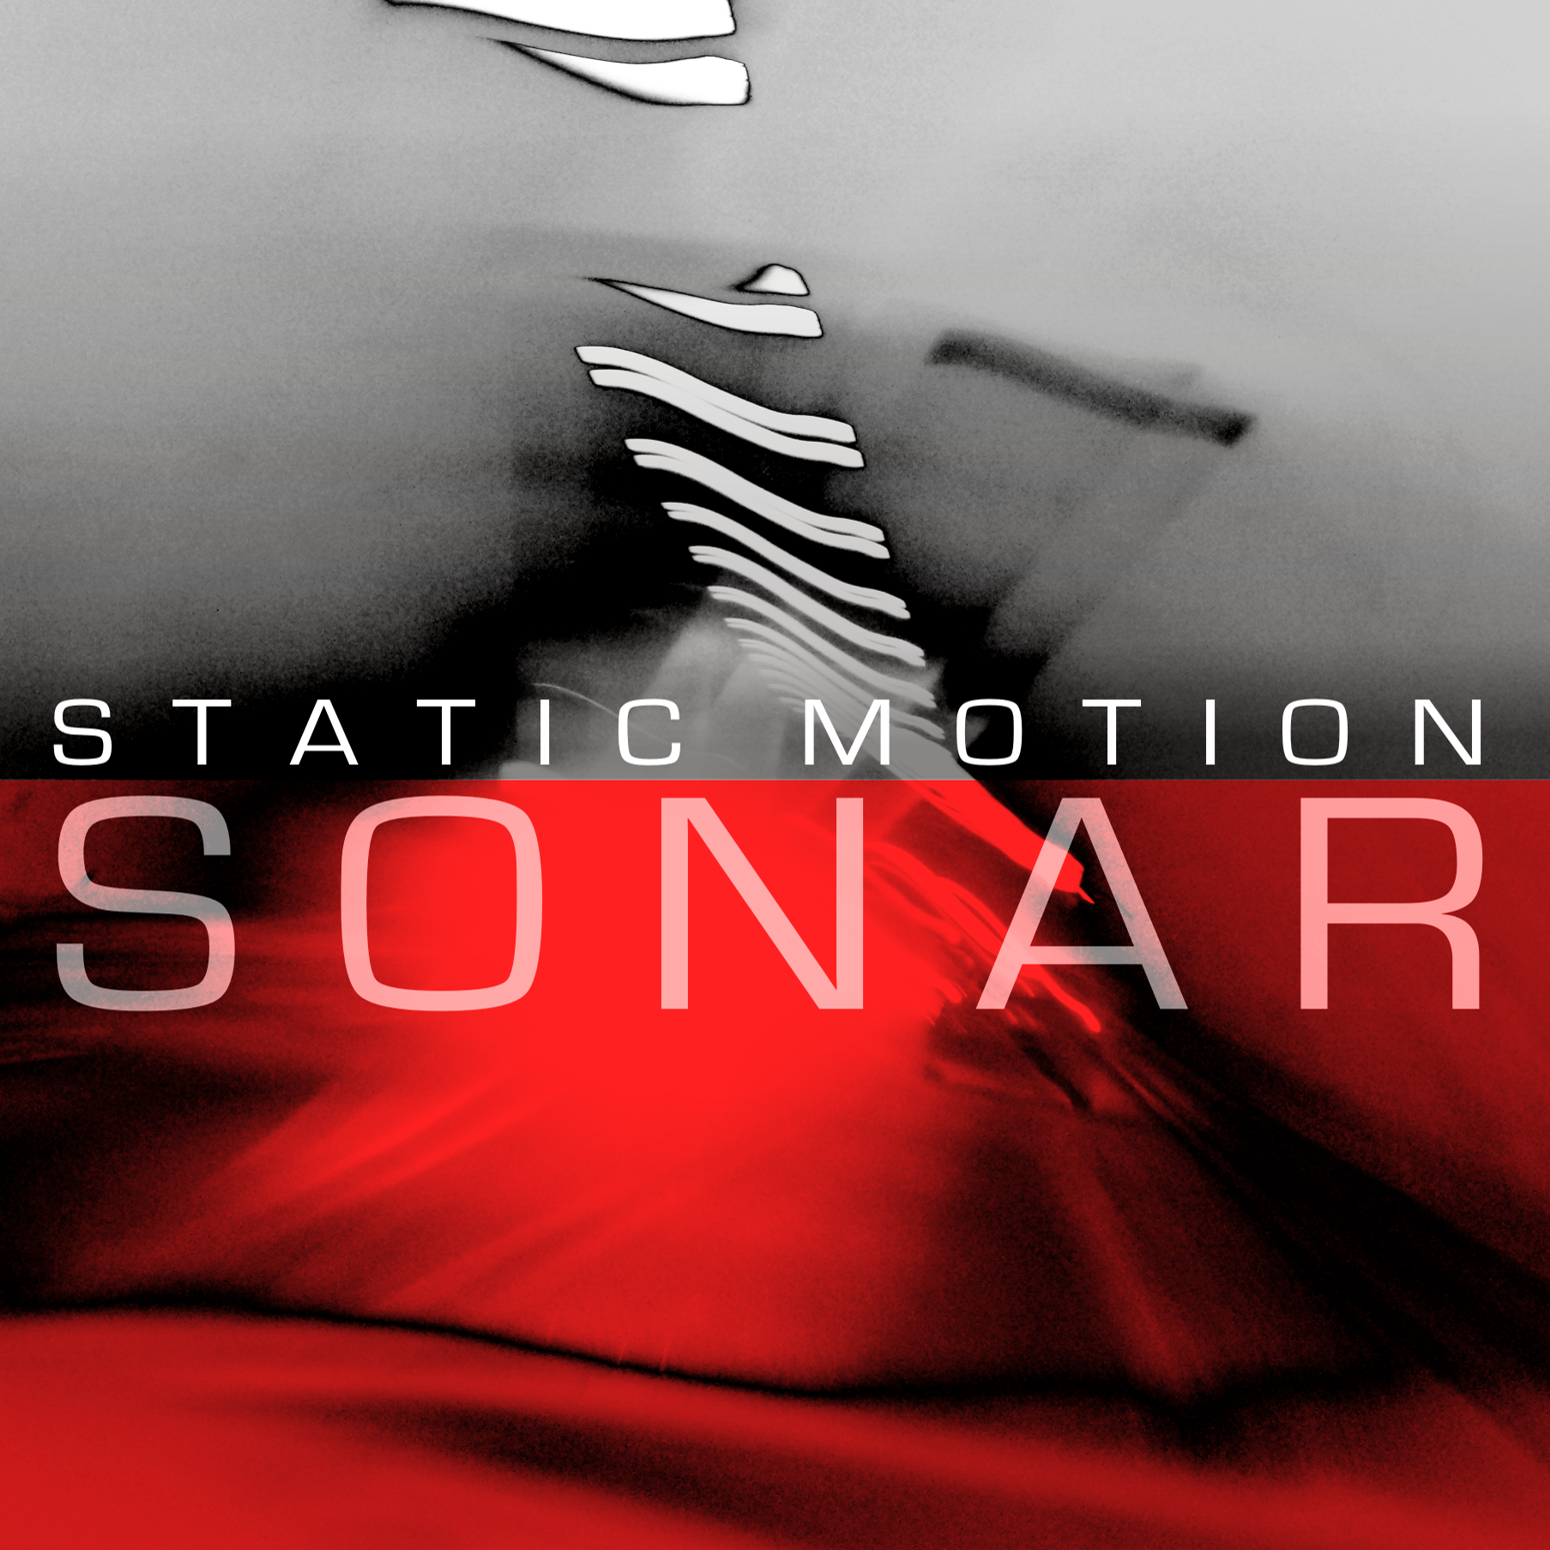 Minimalism Perpetually On Edge – SONAR’s “Static Motion”